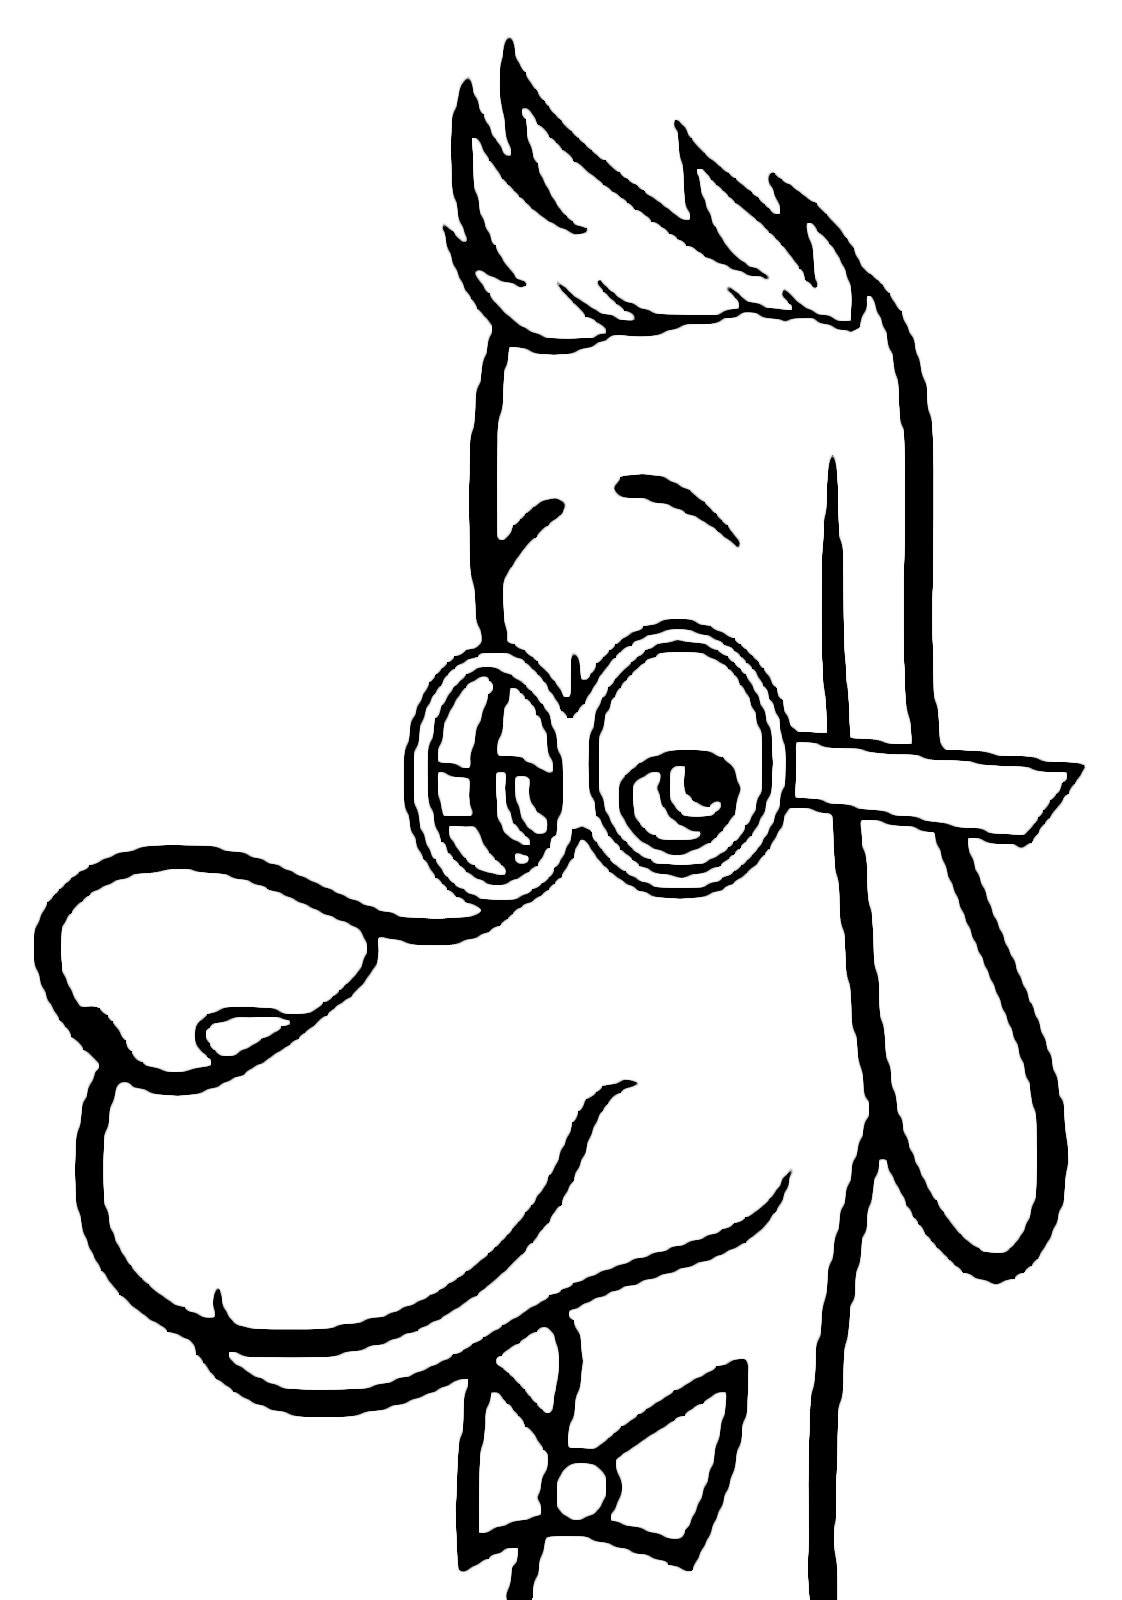 Mr Peabody & Sherman - Mr Peabody the smartest dog in the world